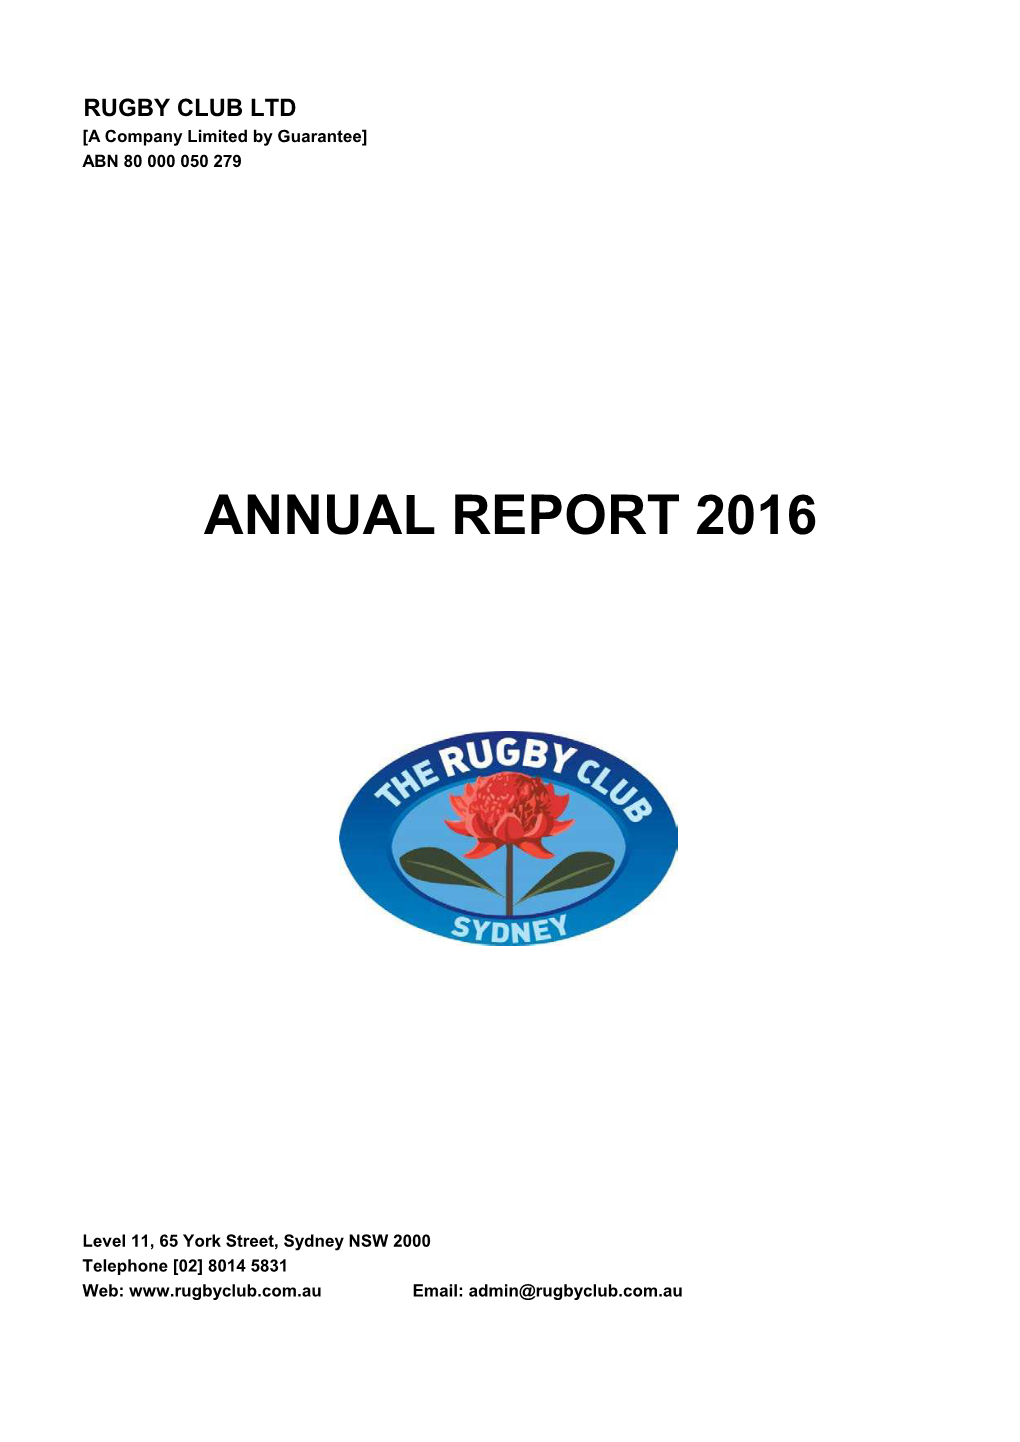 Rugby Club Ltd Annual Report 2016